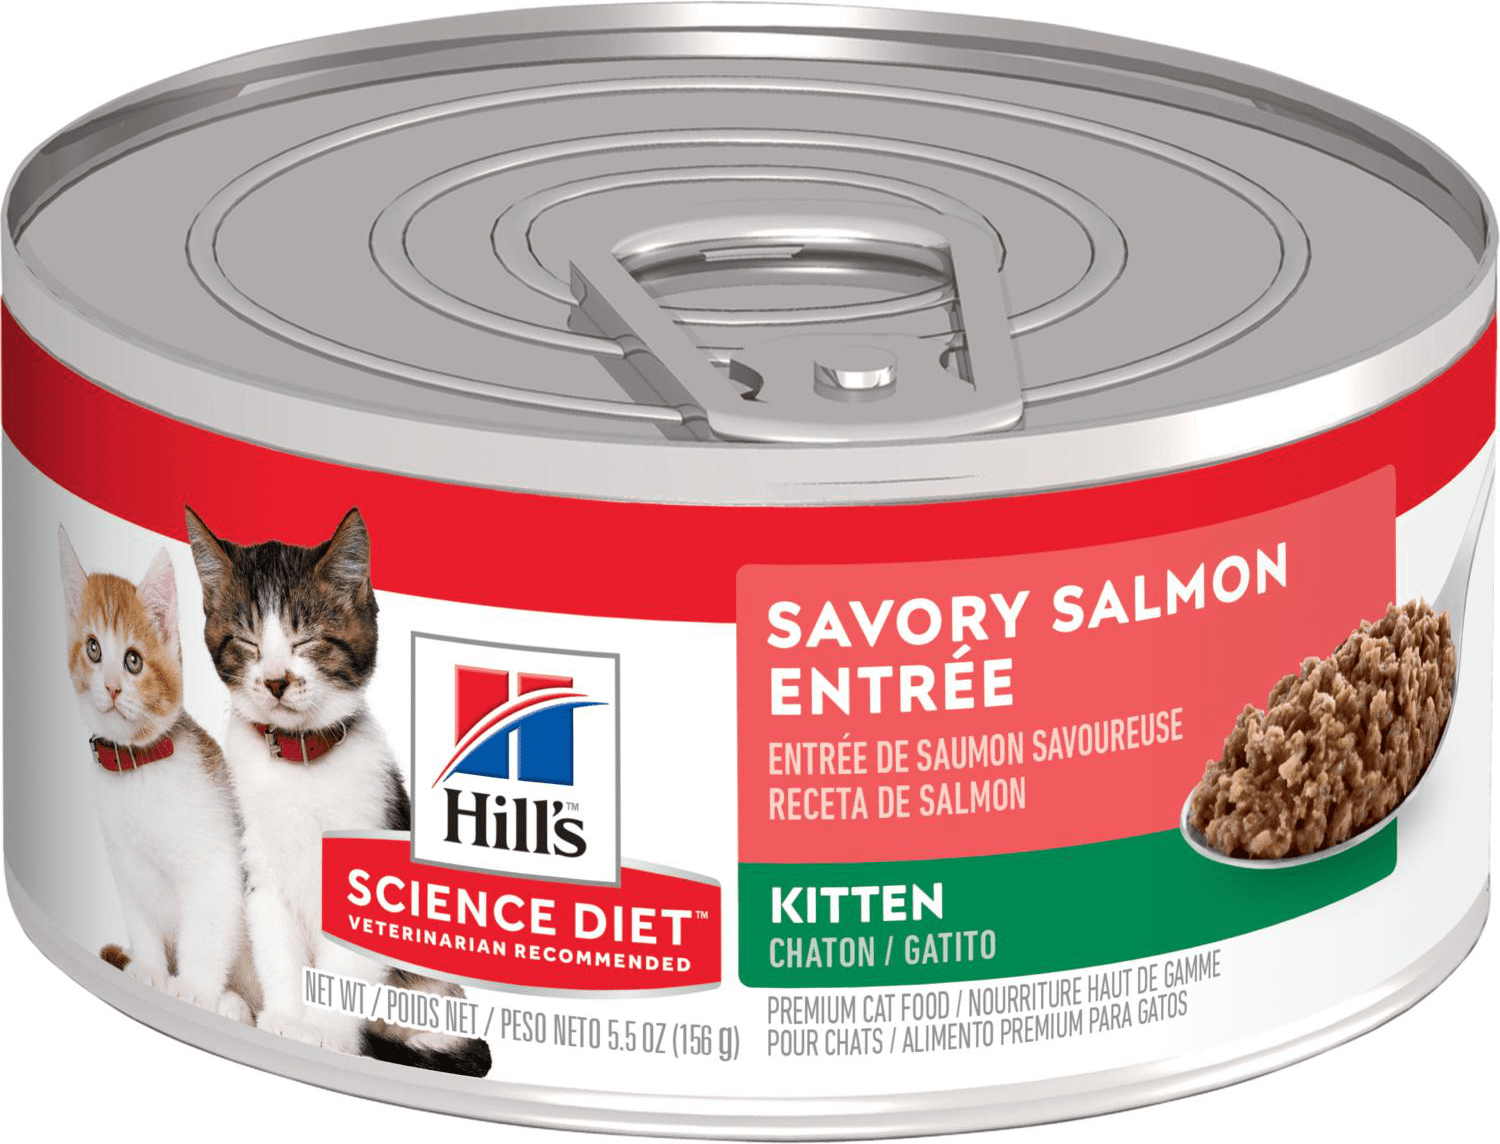 Hill's Science Diet Kitten Savory Salmon Entrée